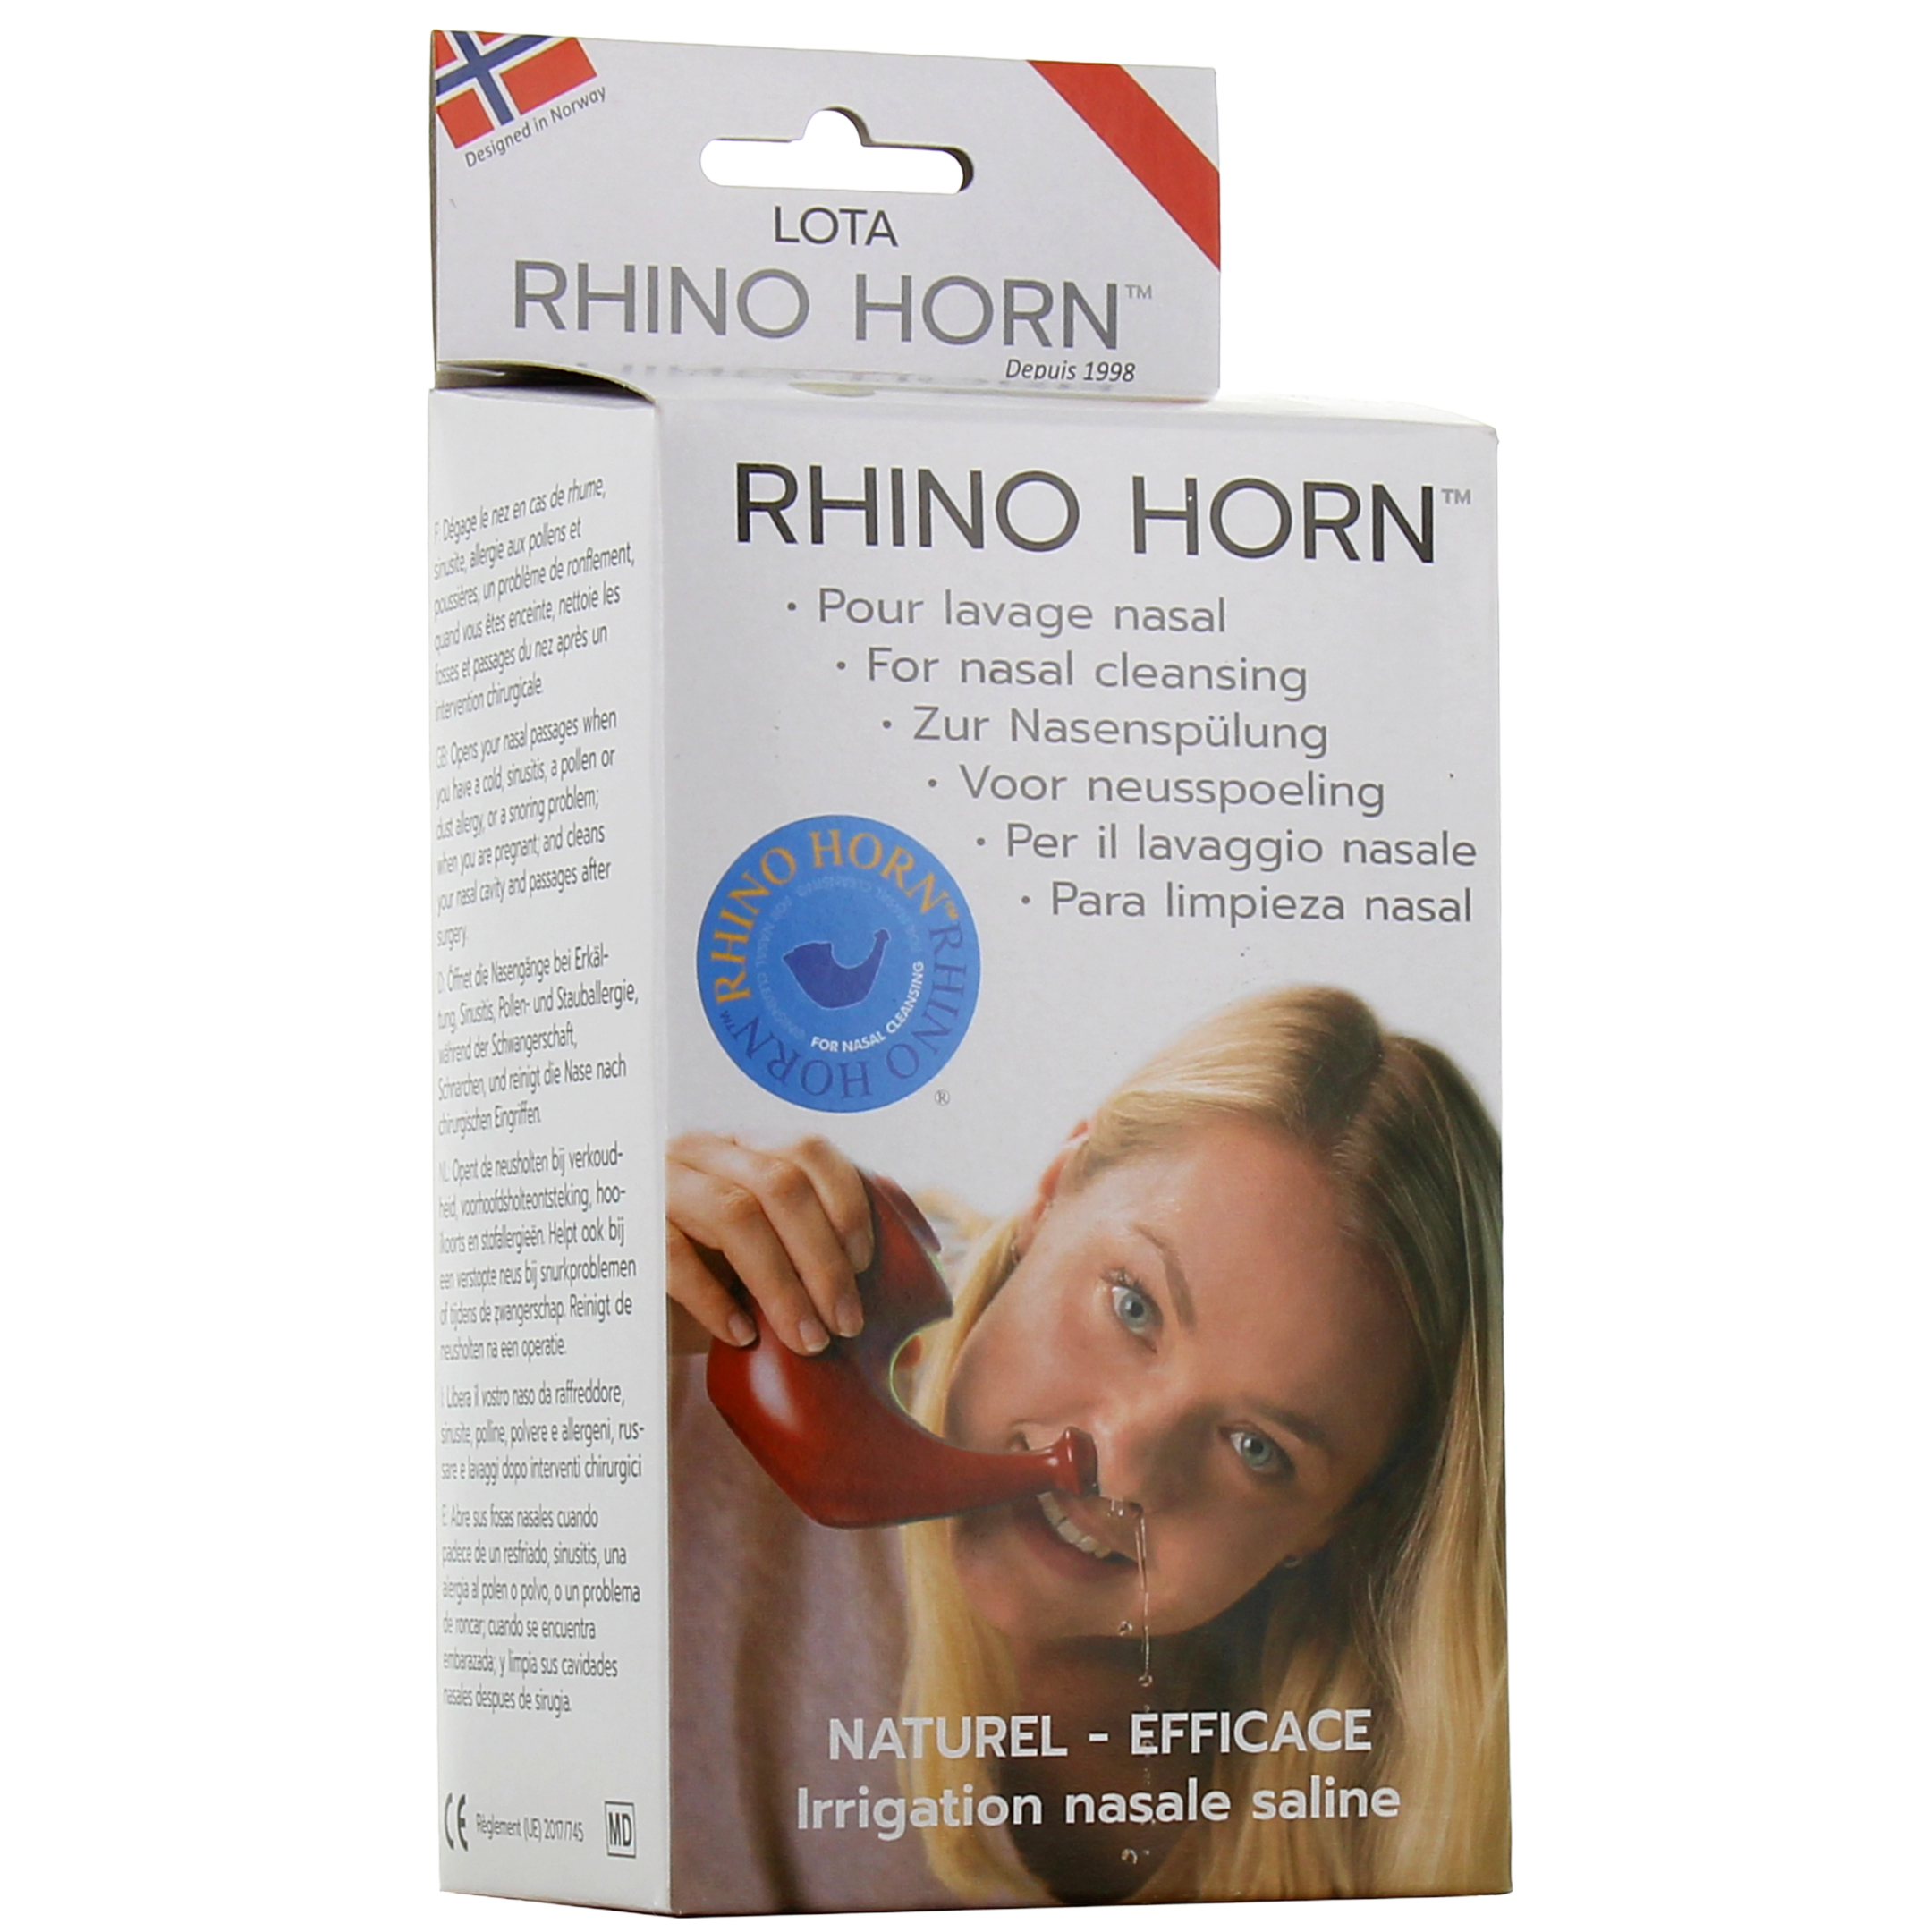 Rhino Horn Lavage Nasal